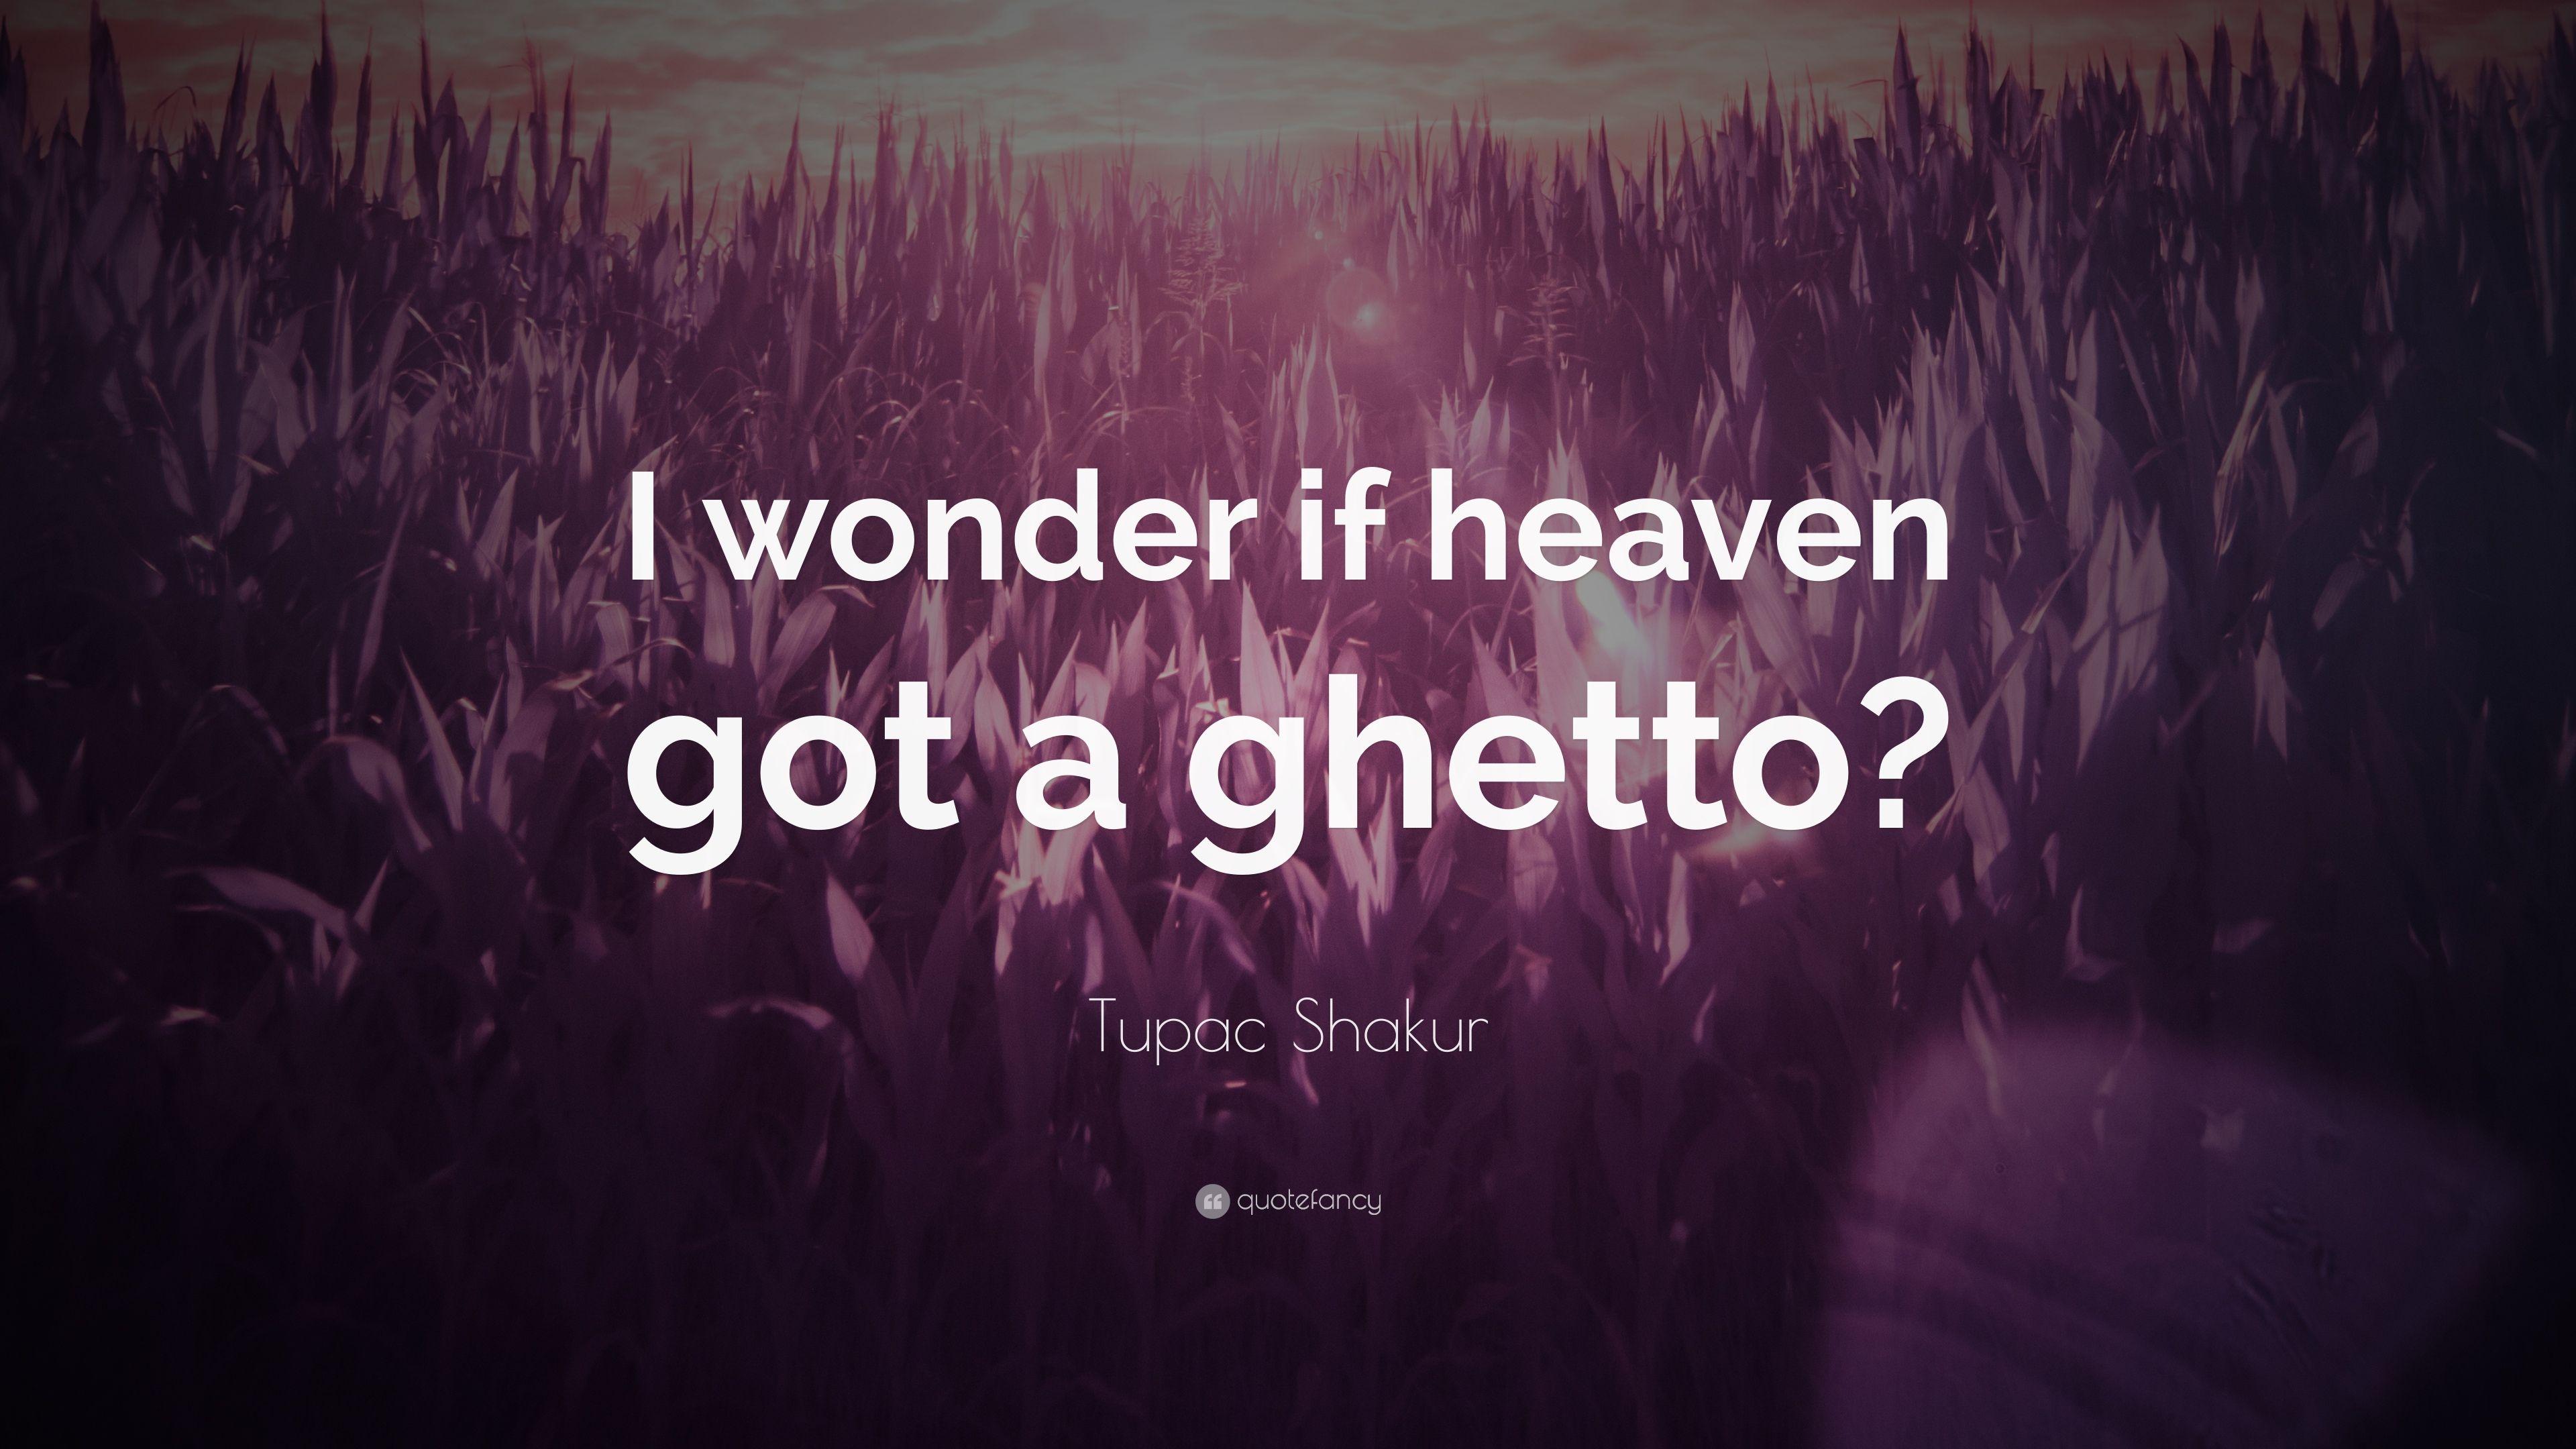 Tupac Shakur Quote: “I wonder if heaven got a ghetto?” 10